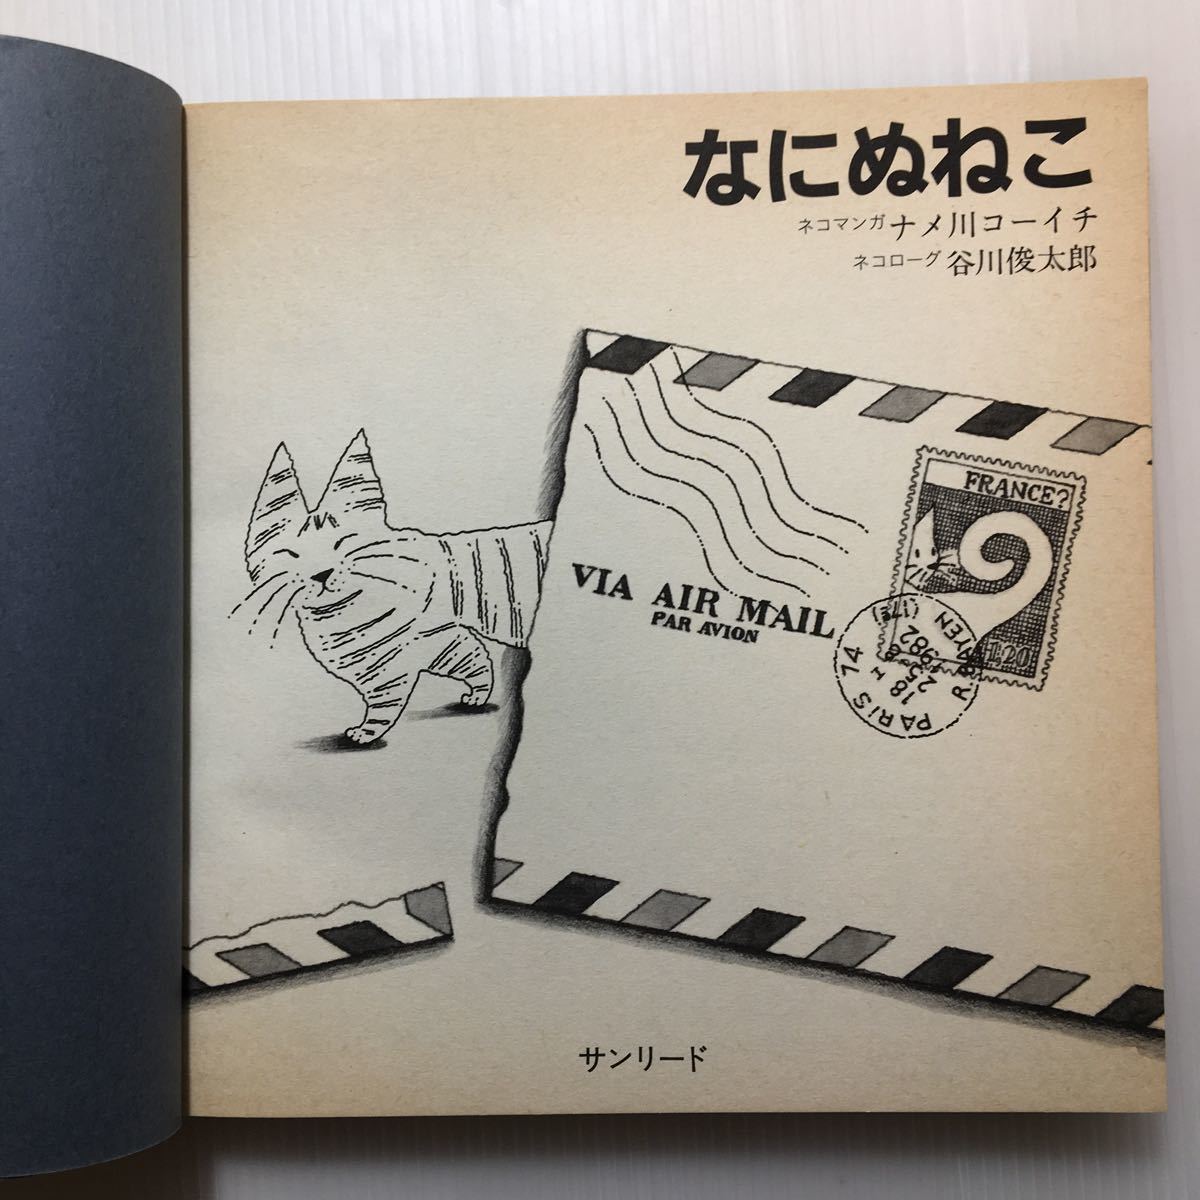 zaa-m1b♪なにぬねこ 　 単行本 1983/4/1 ナメ川コーイチ (著), 谷川俊太郎 (著) (サンリード)